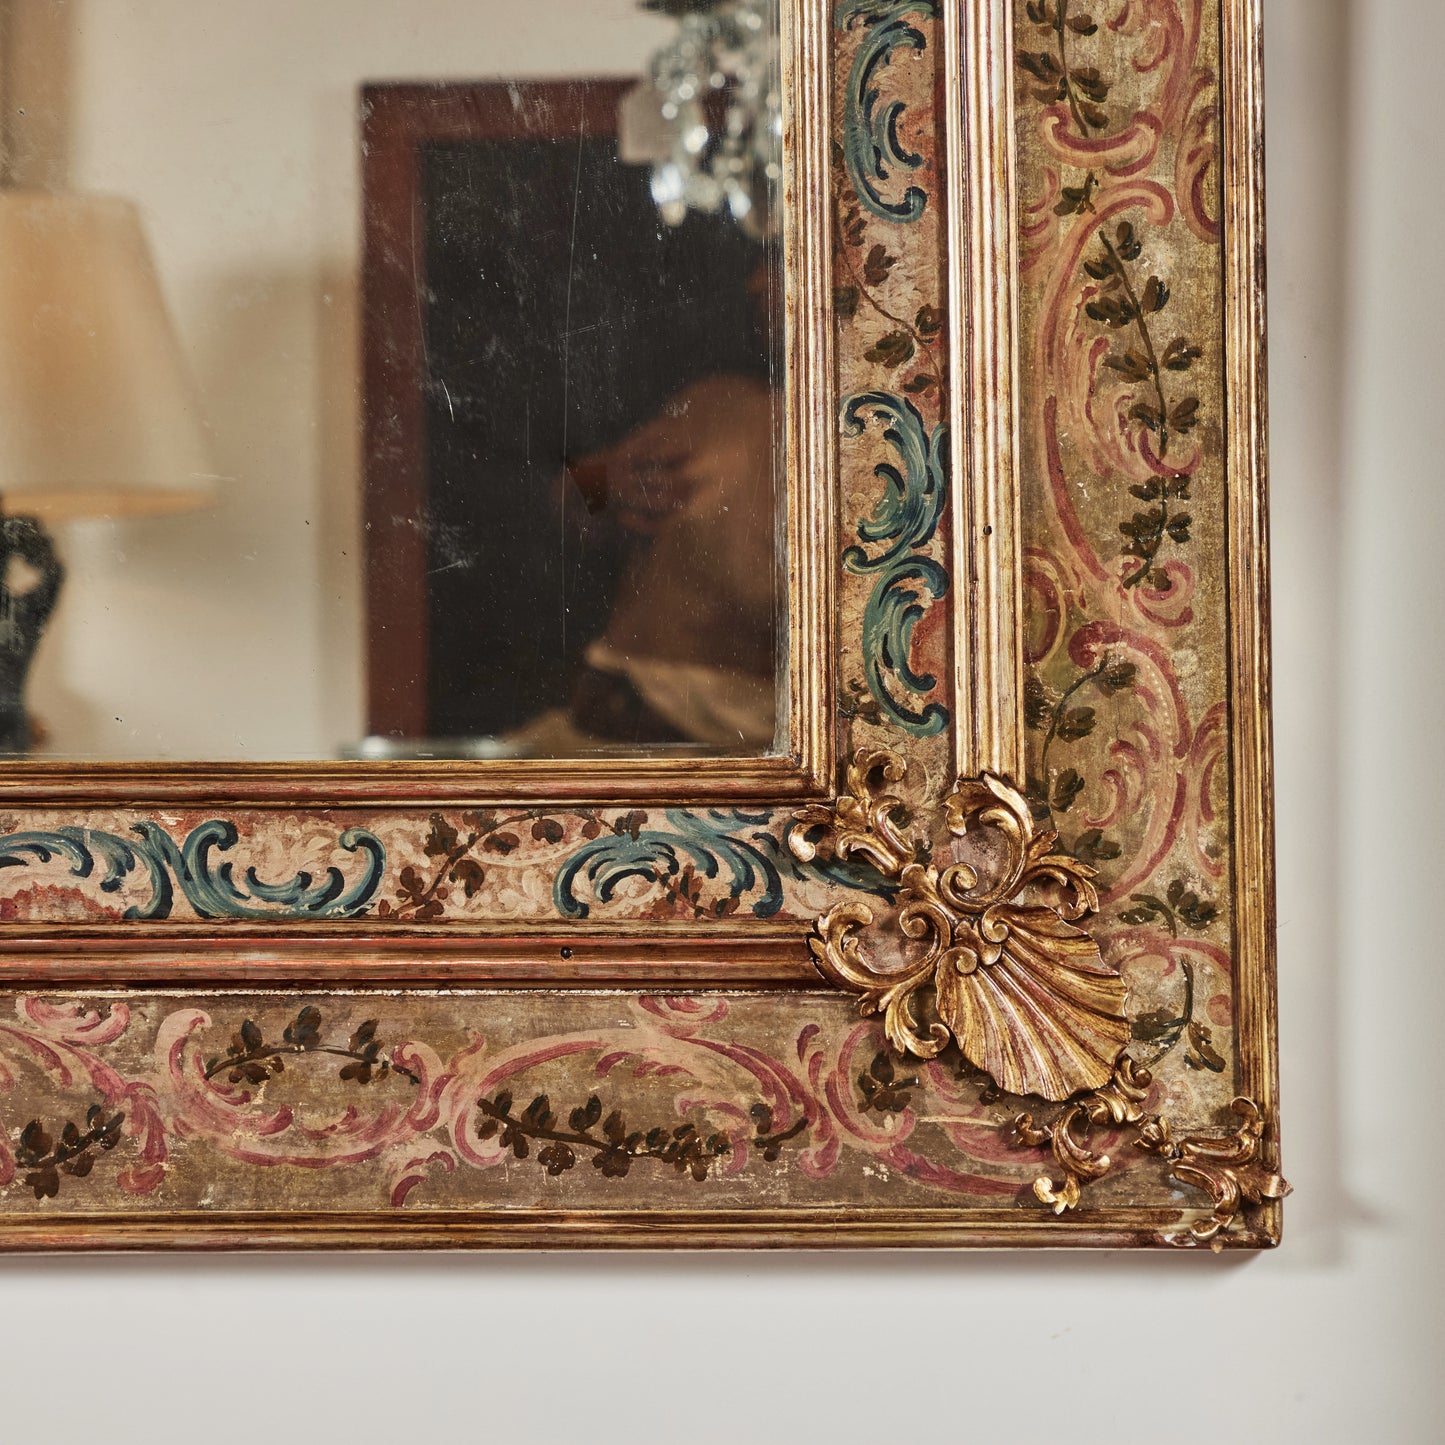 Neoclassical "Four Seasons" Mirrors